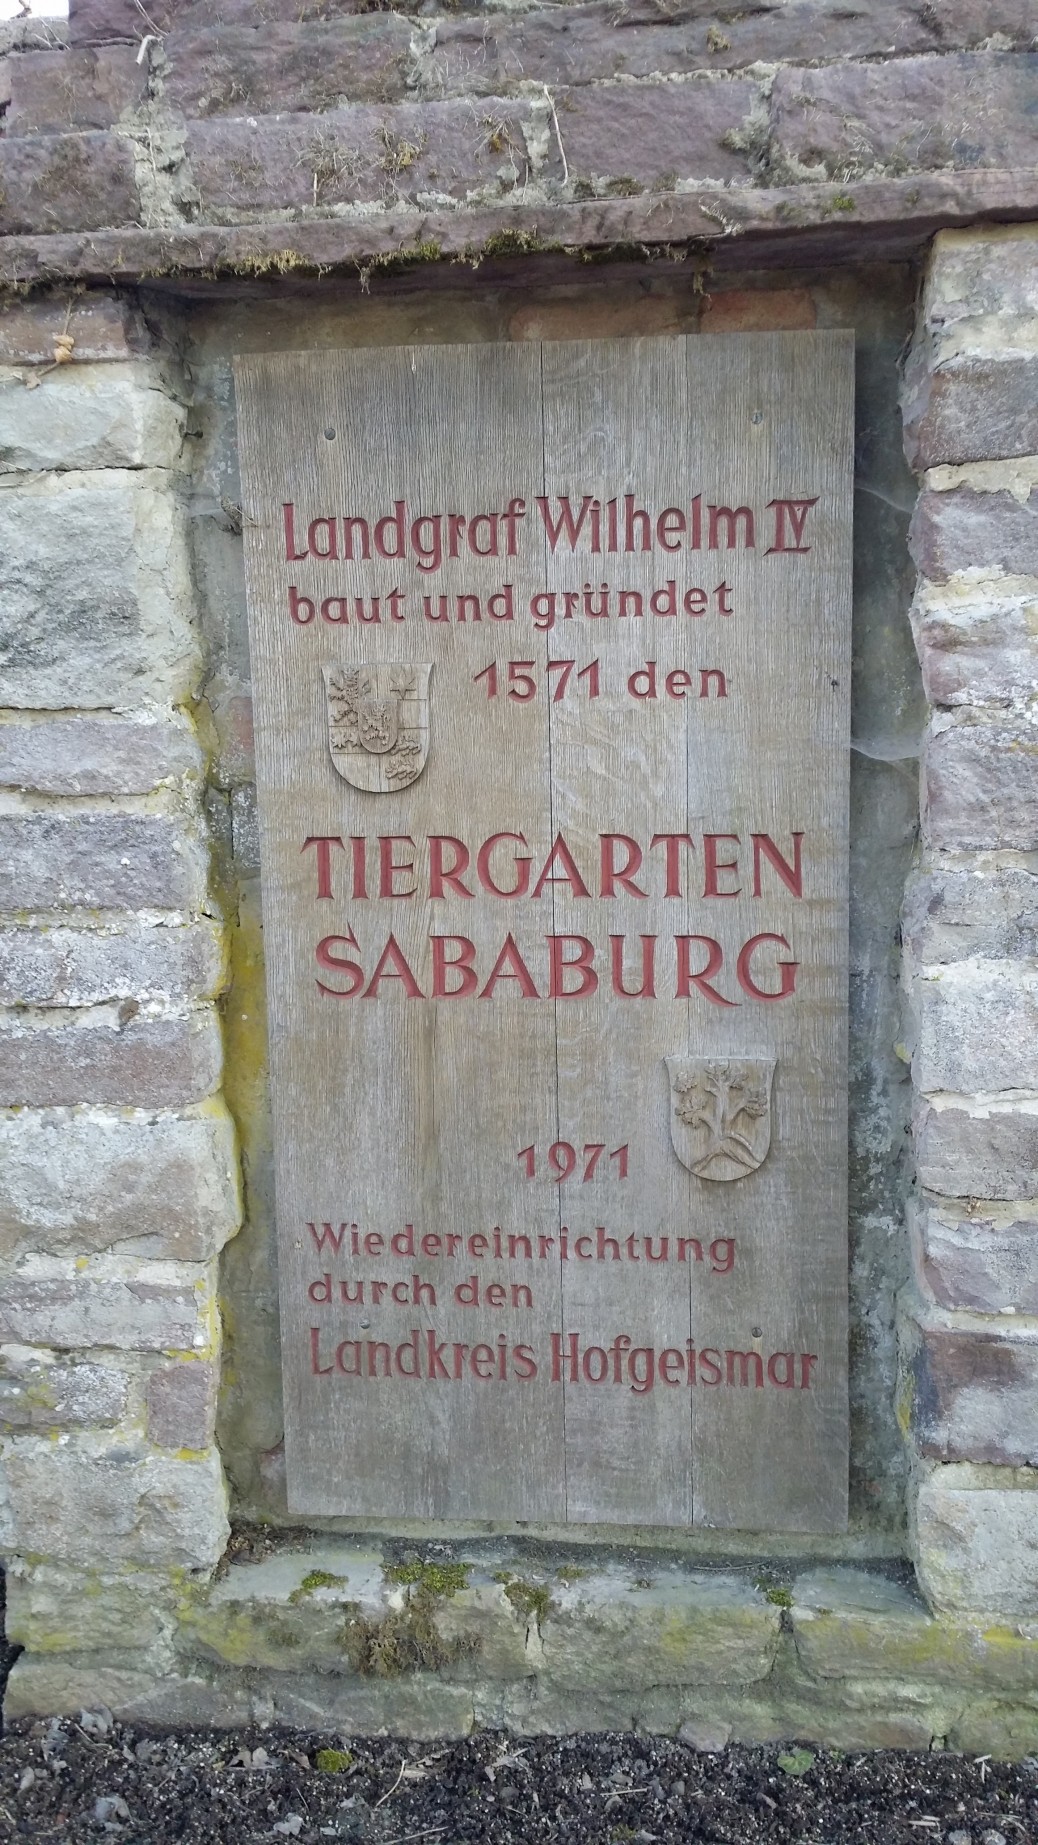 Tiergarten Sababurg